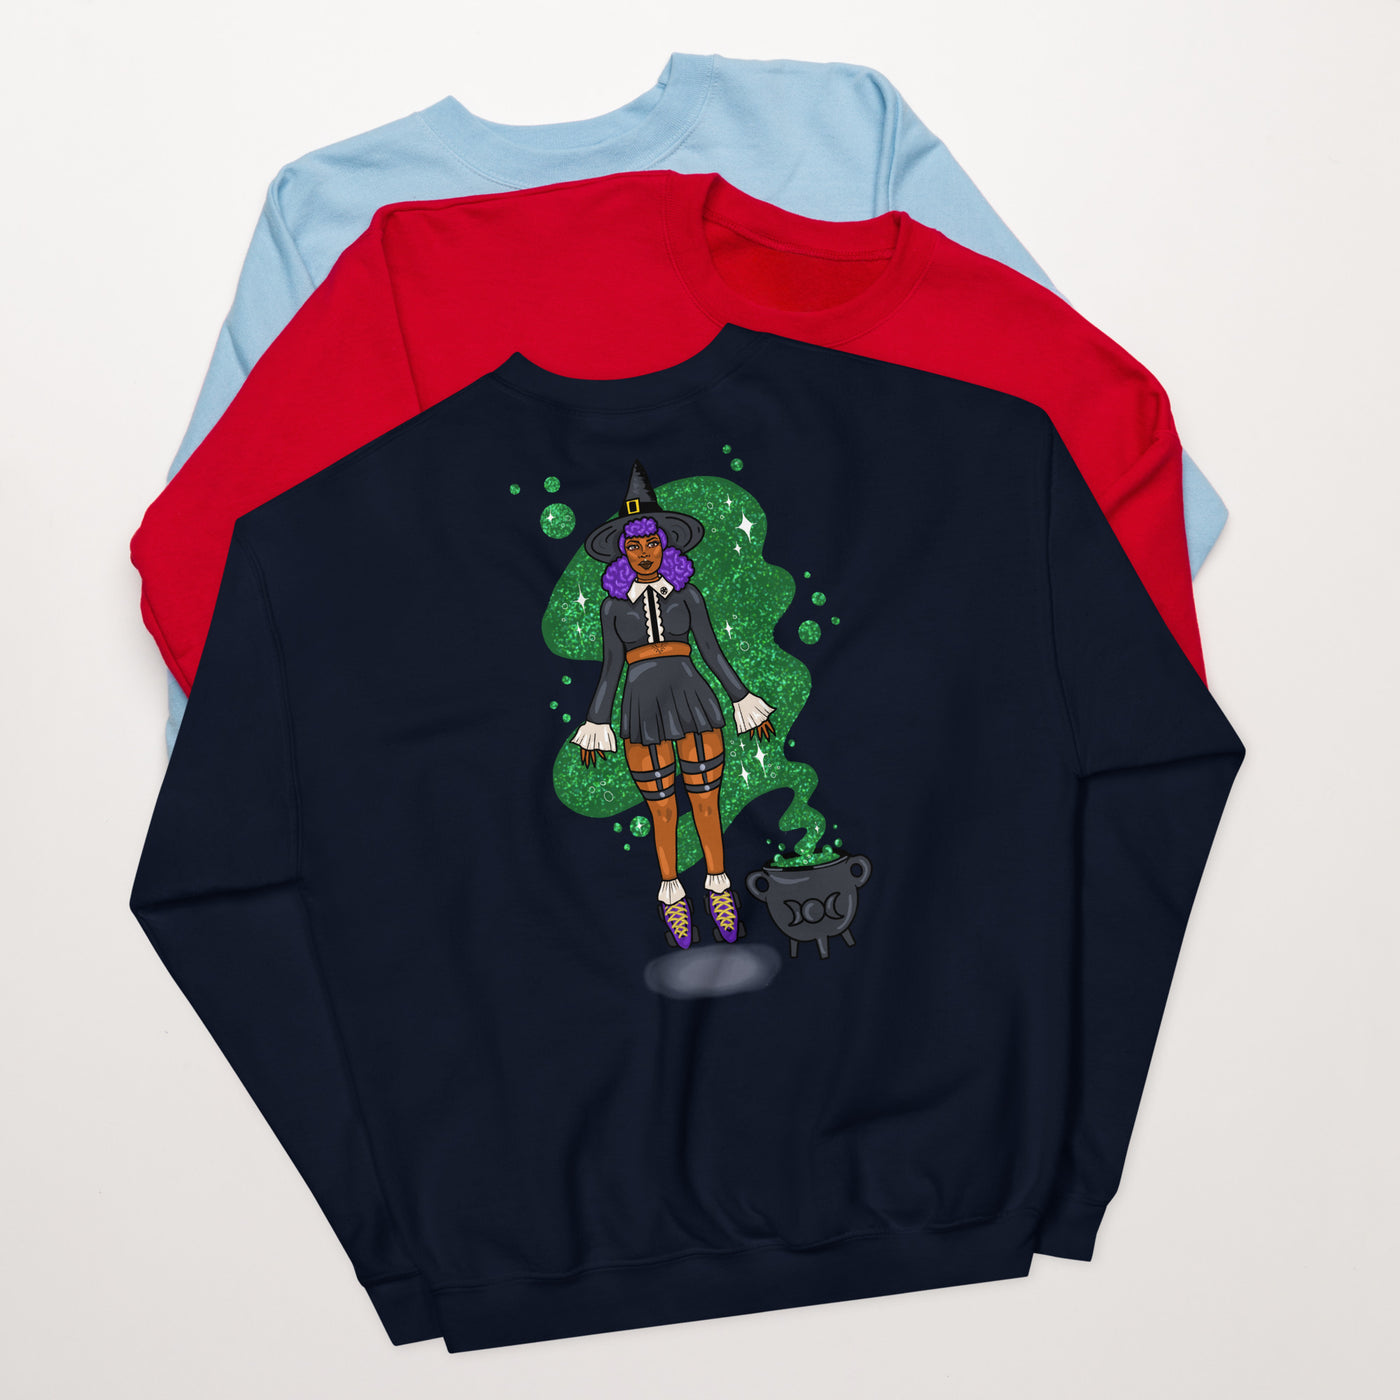 Black Grrrl Magic Unisex Sweatshirt